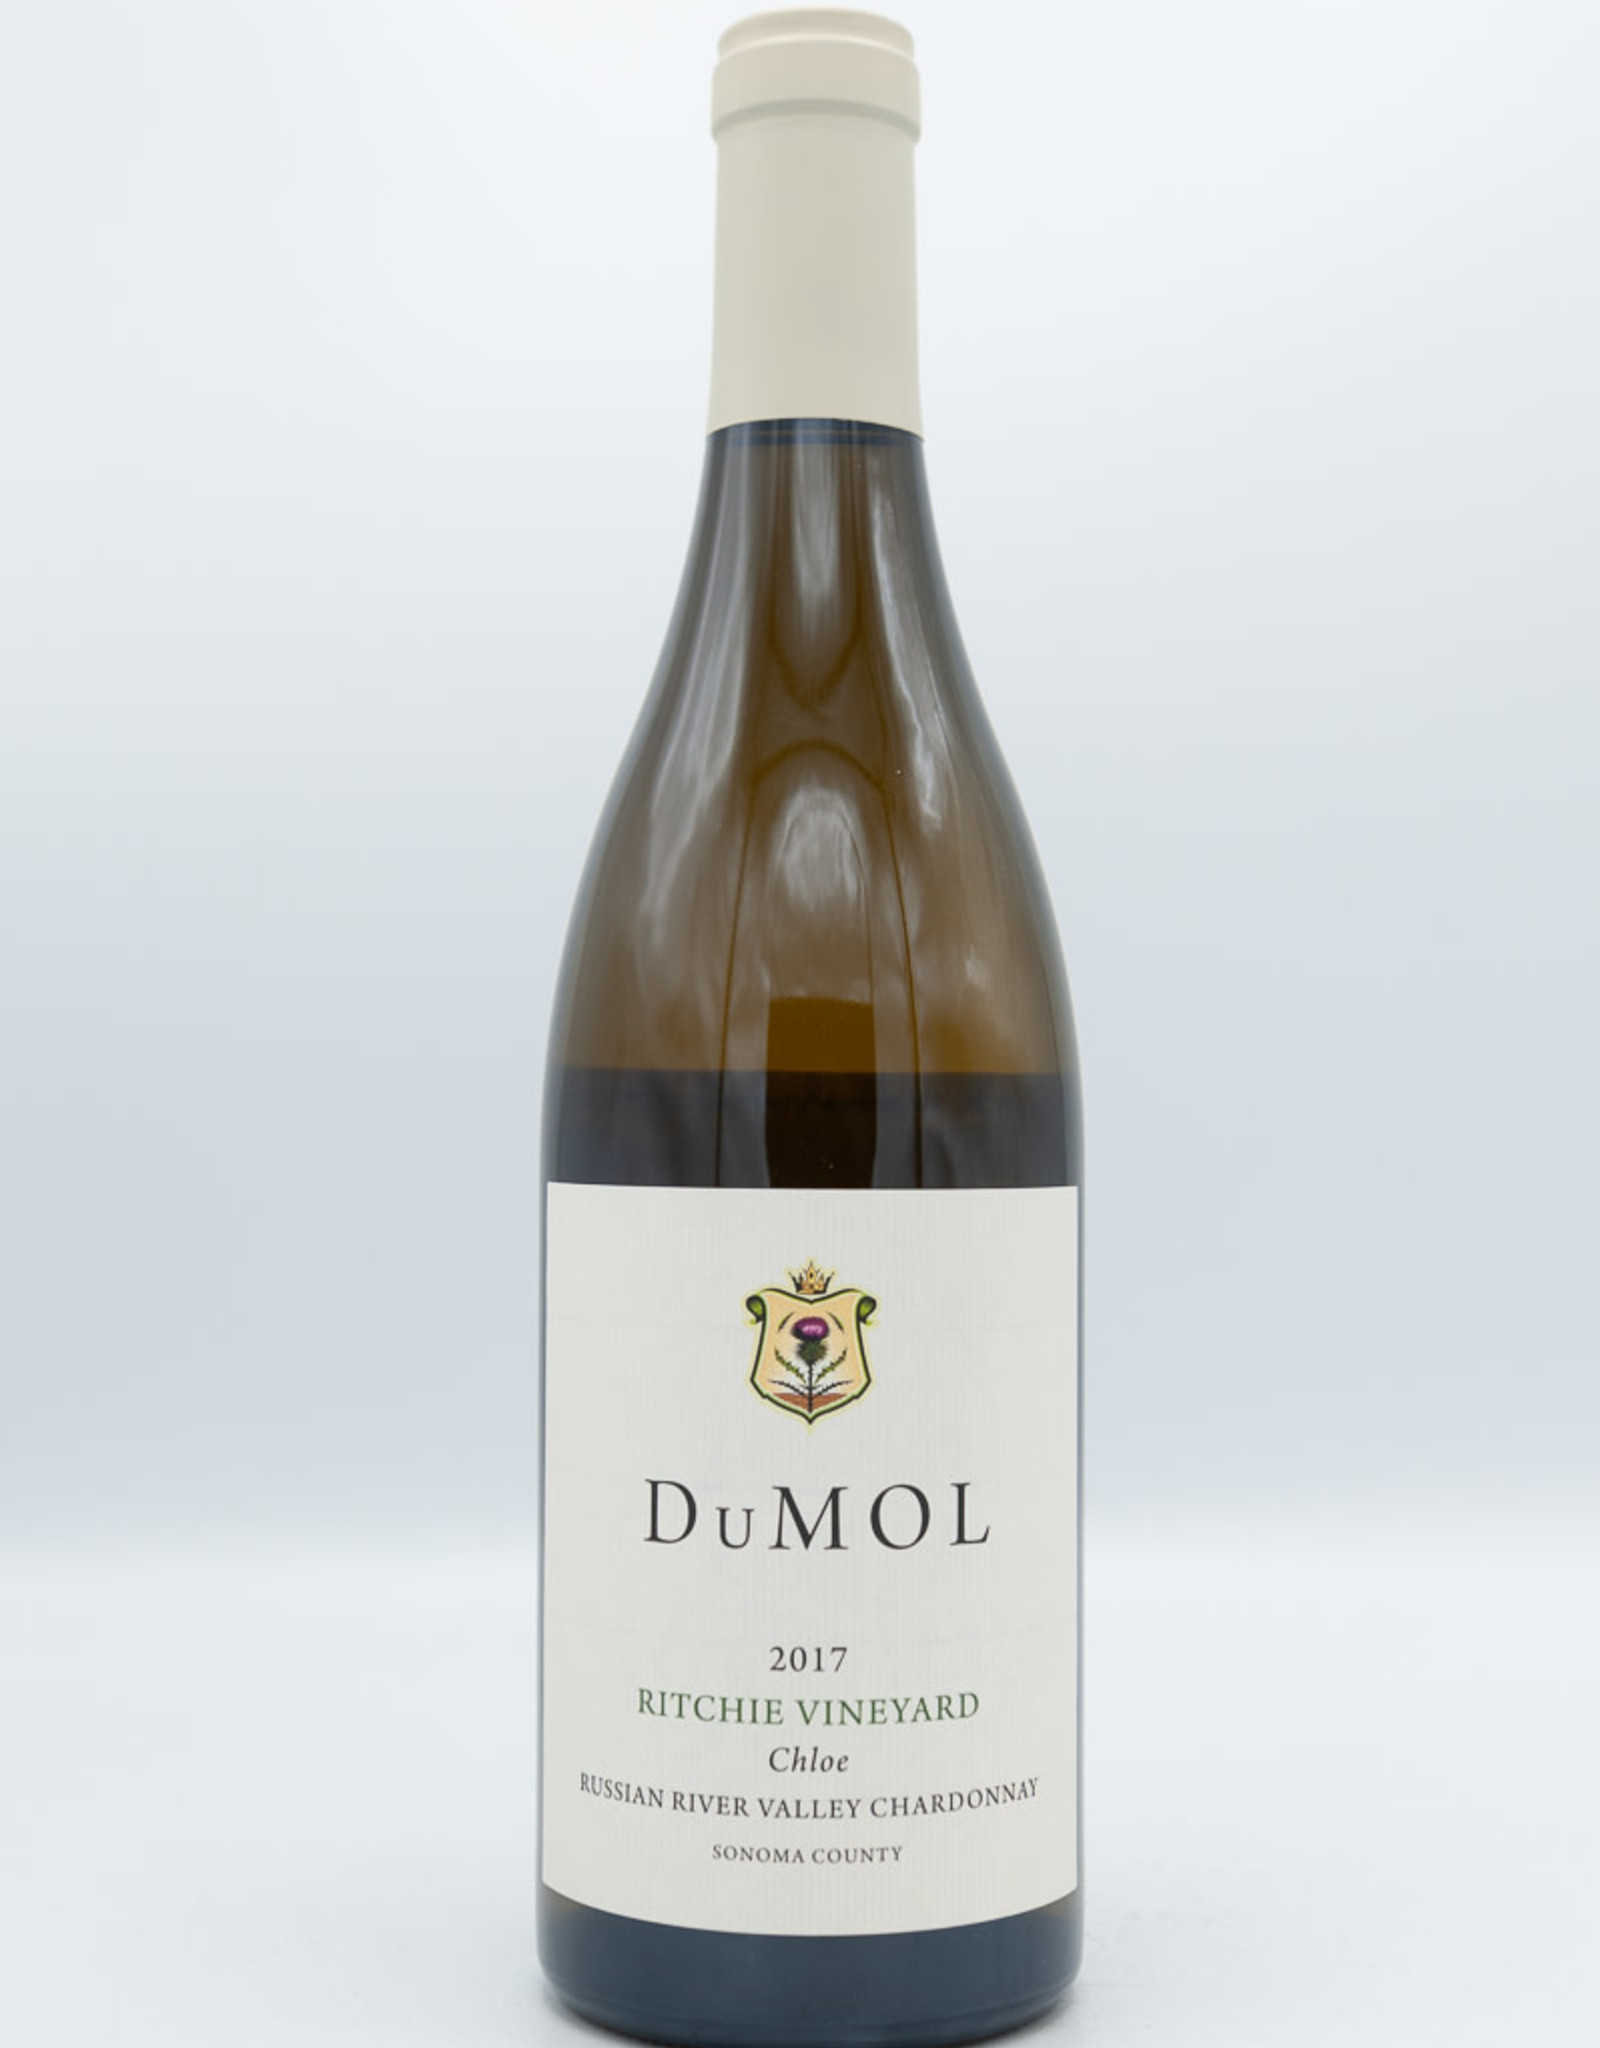 DuMOL "Chloe" Russian River Valley Chardonnay